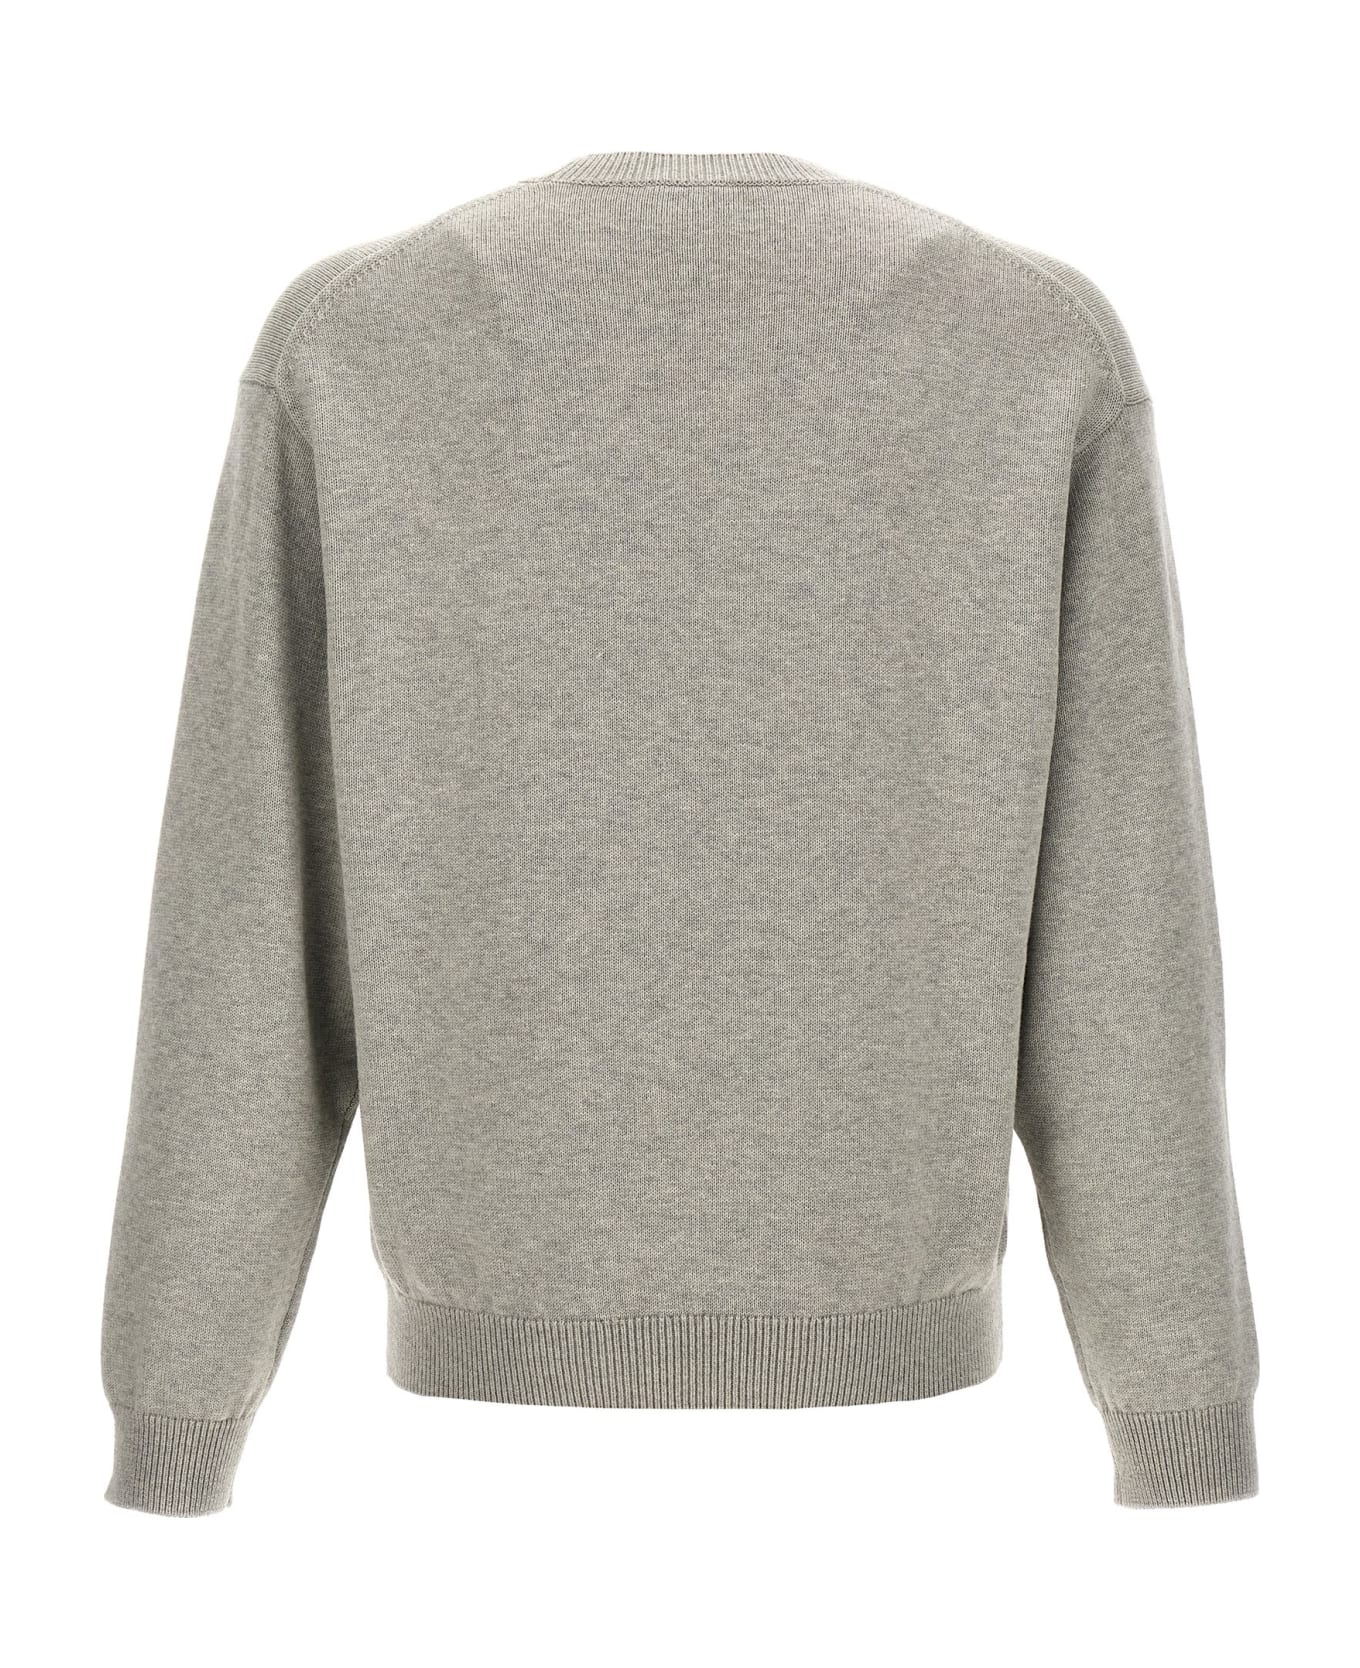 Kenzo Tiger Academy Sweater - grey フリース